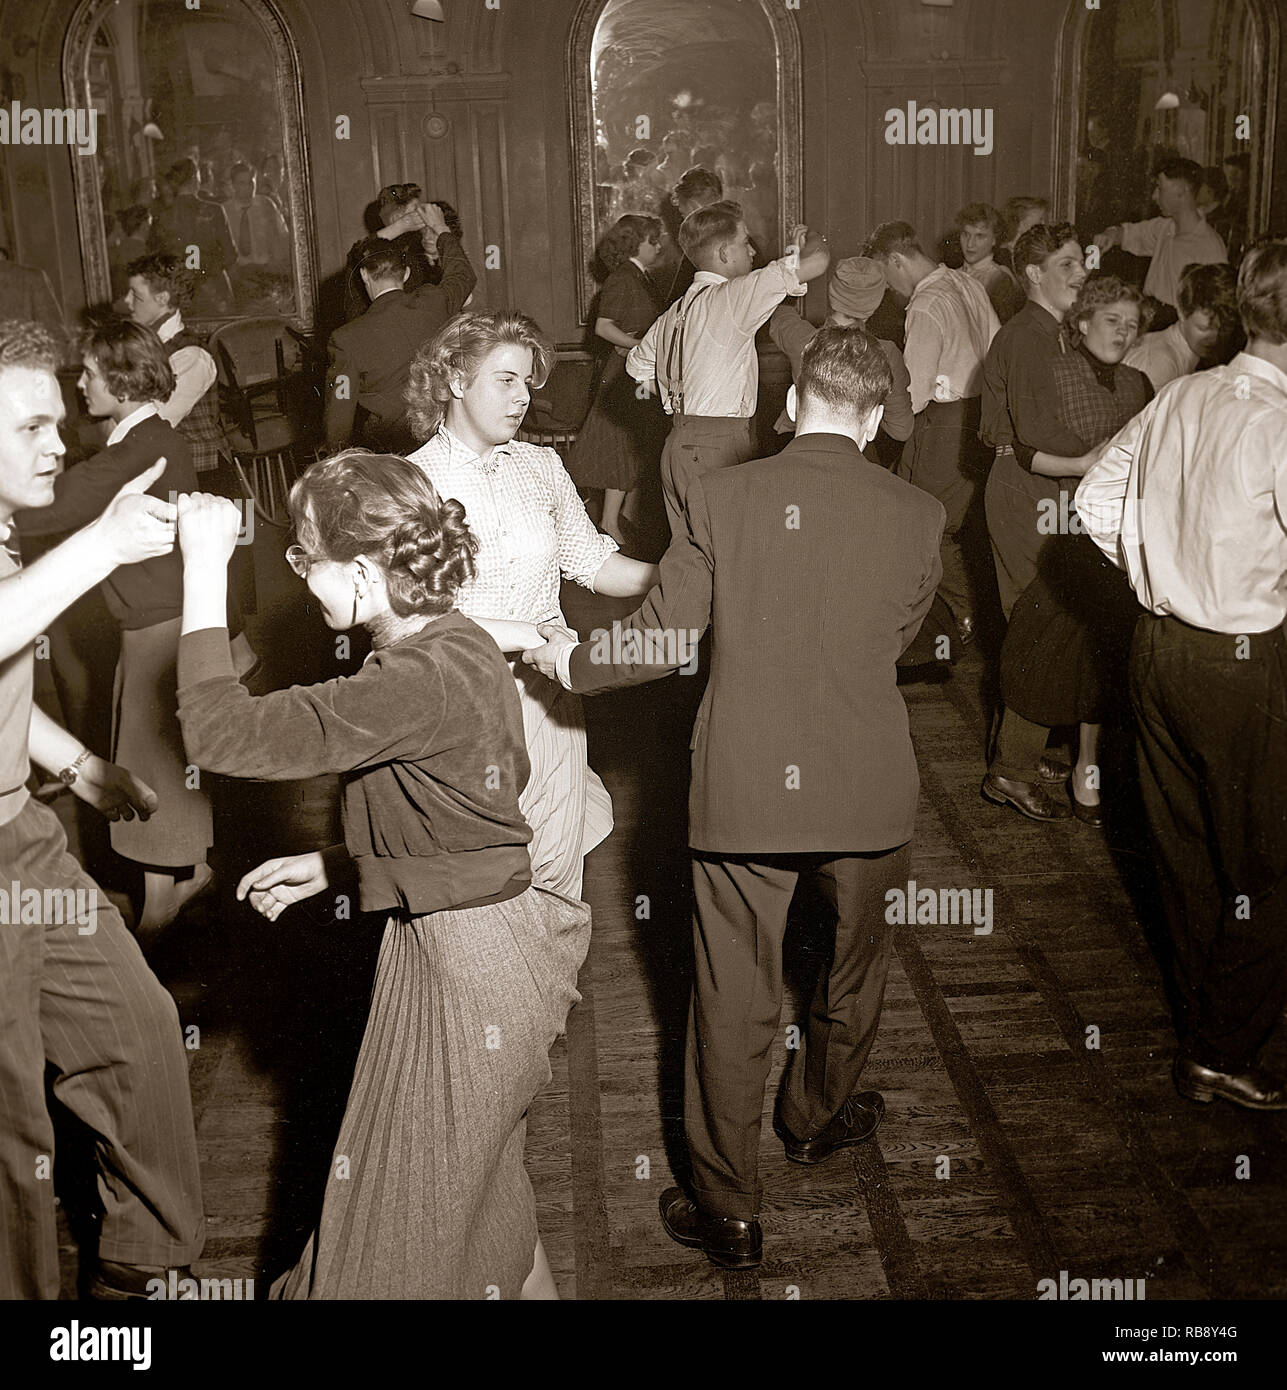 Dancing 1950s Immagini e Fotos Stock - Alamy